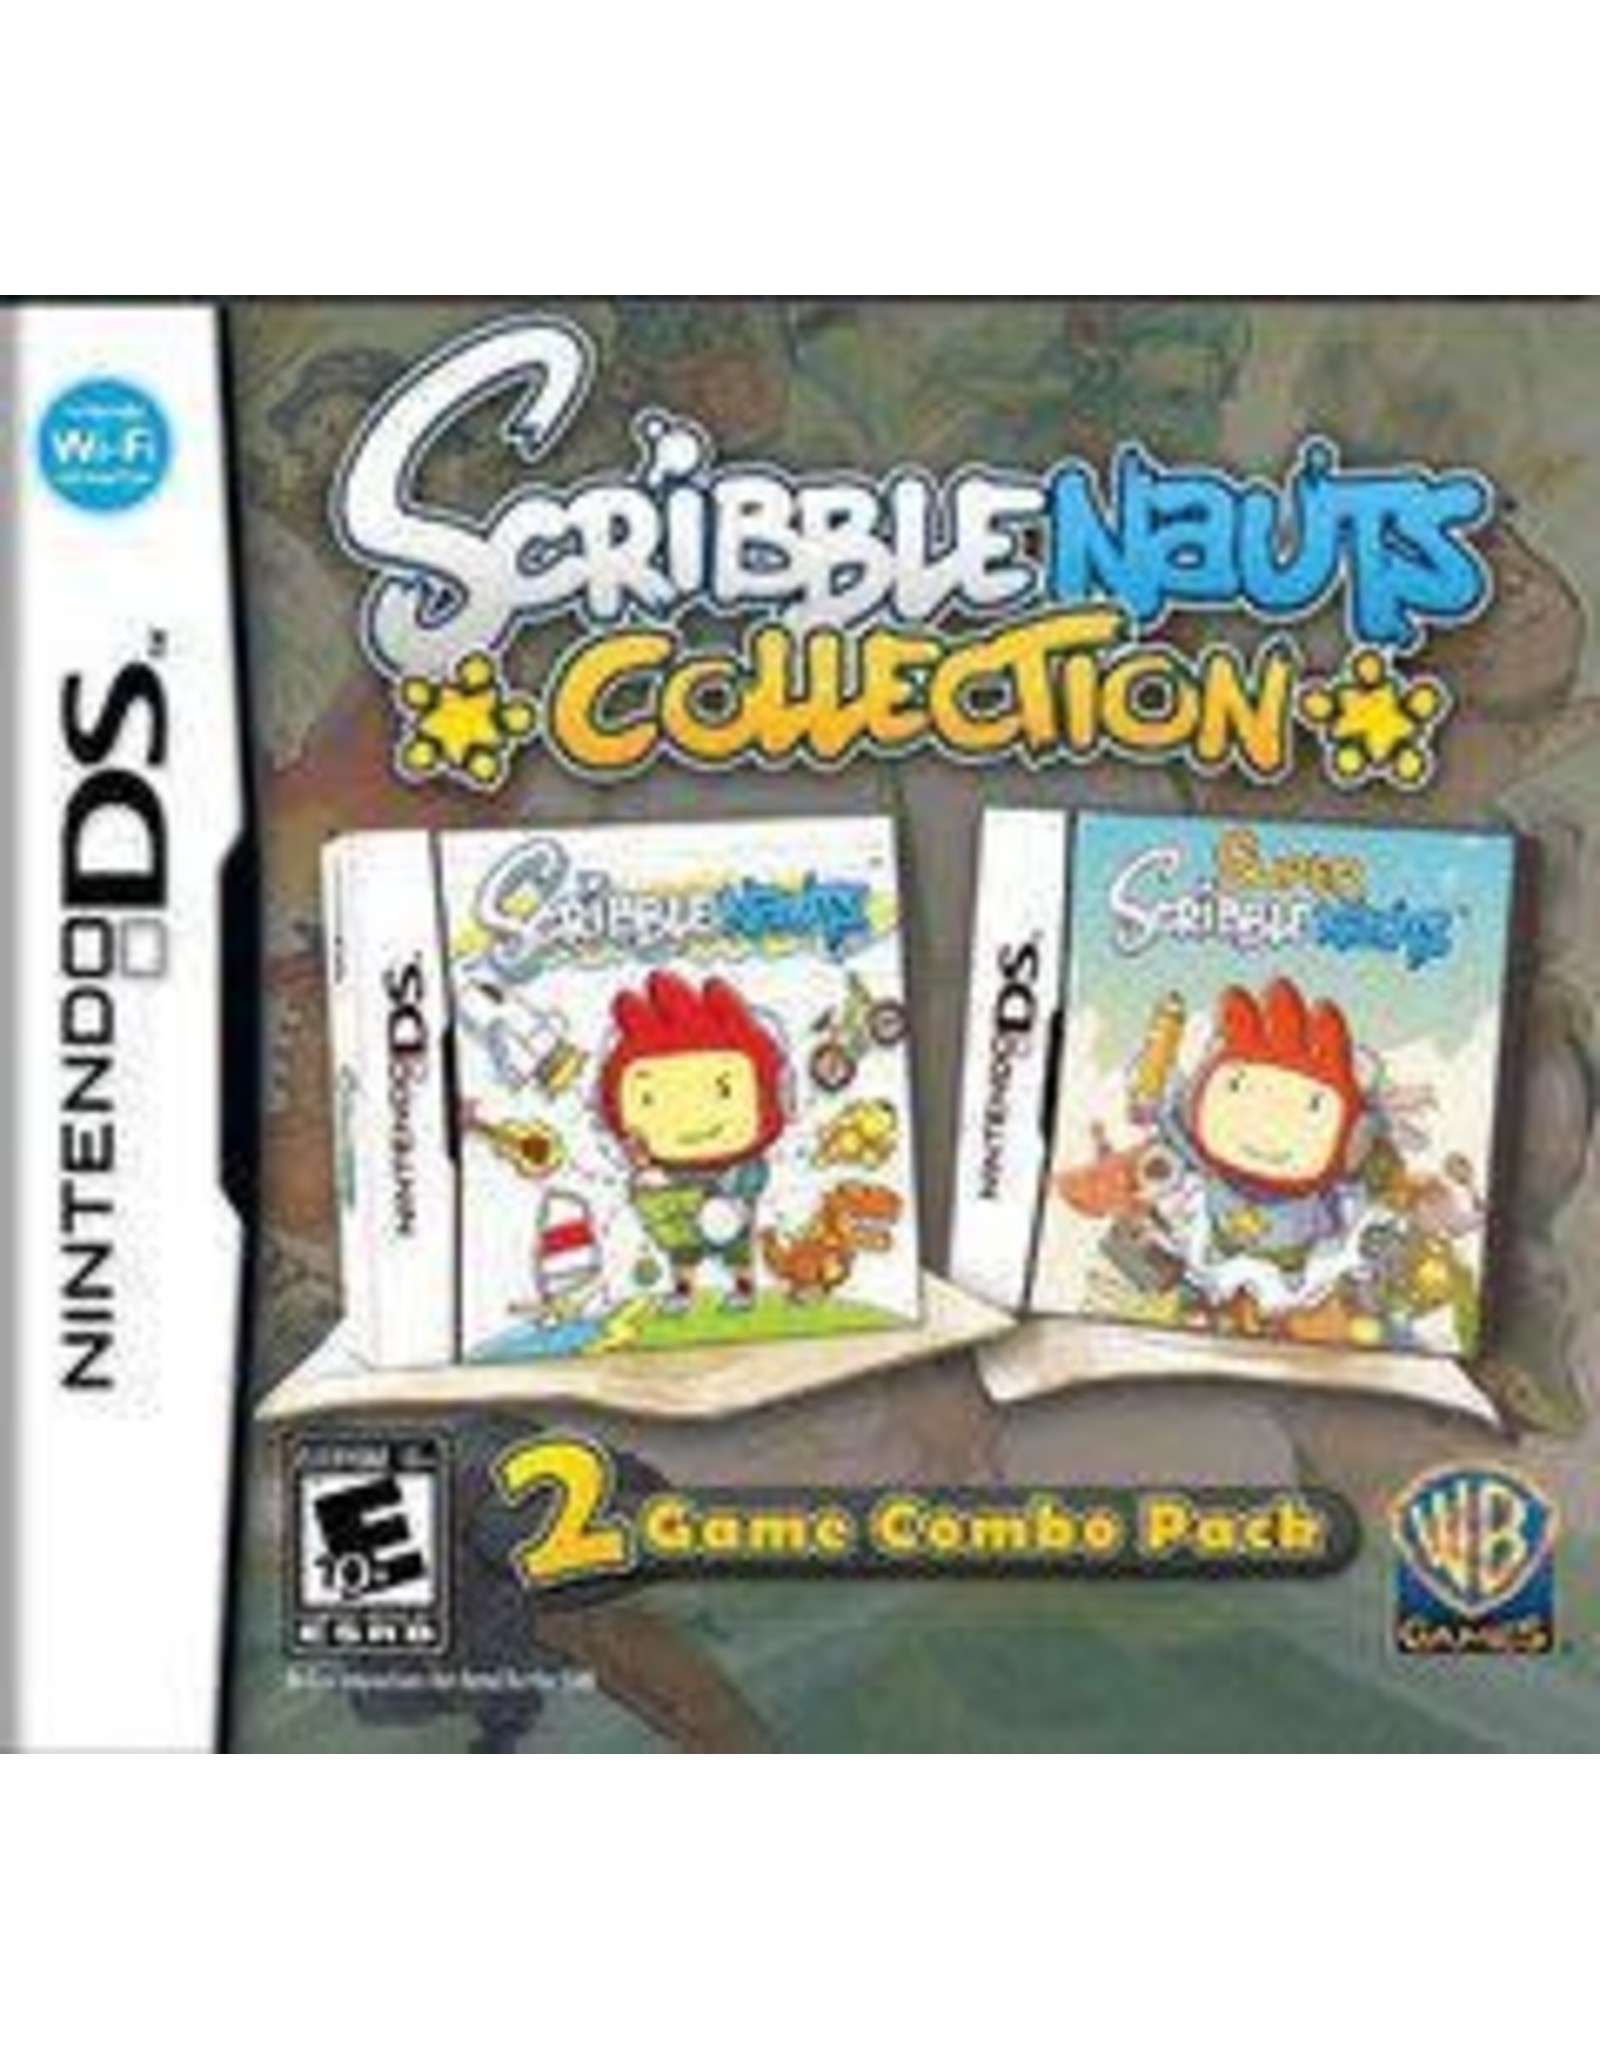 Nintendo DS Scribblenauts Collection (CiB)